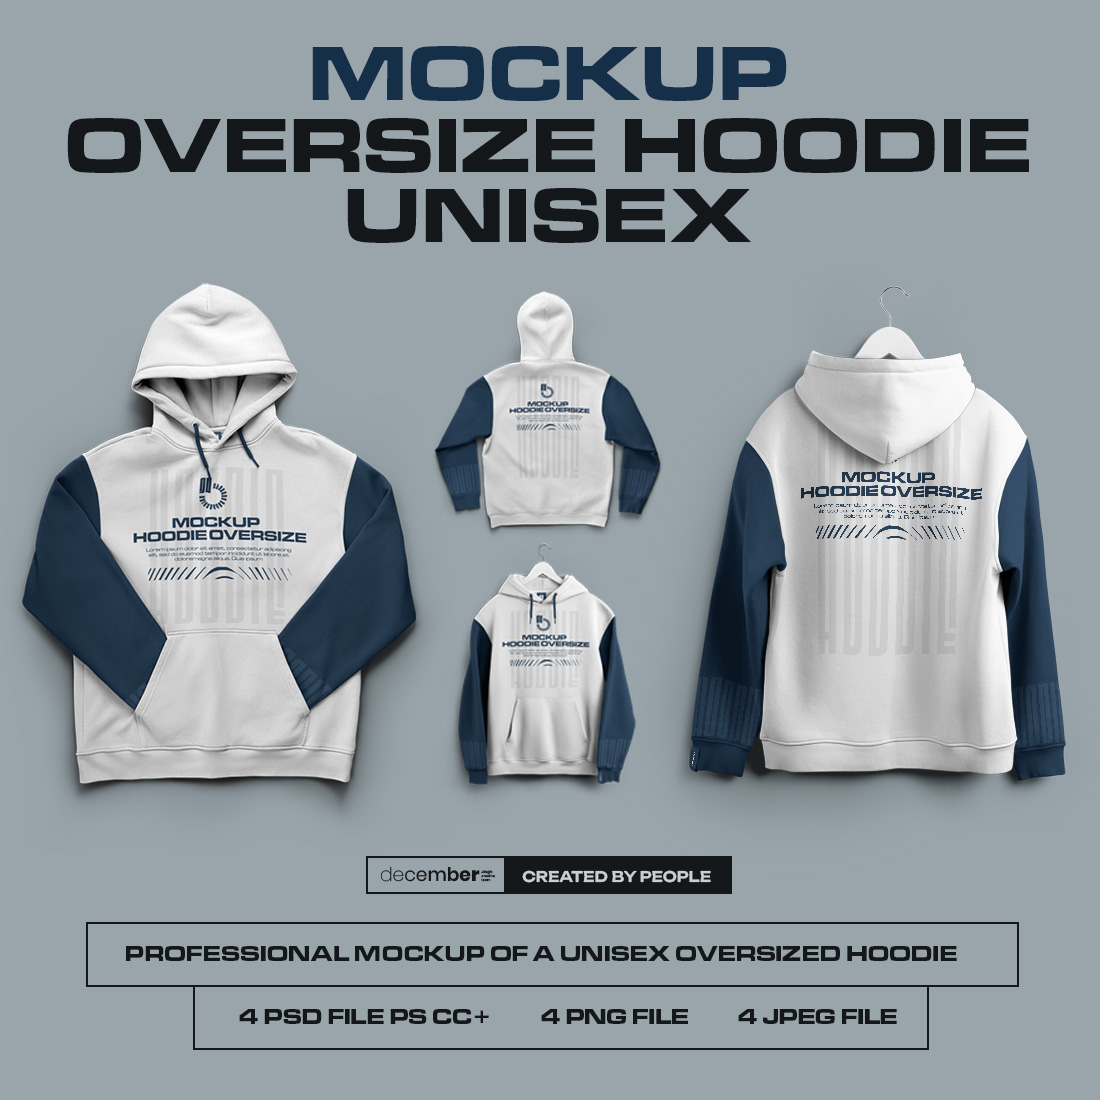 4 Mockups Unisex Oversize Hoodie cover image.